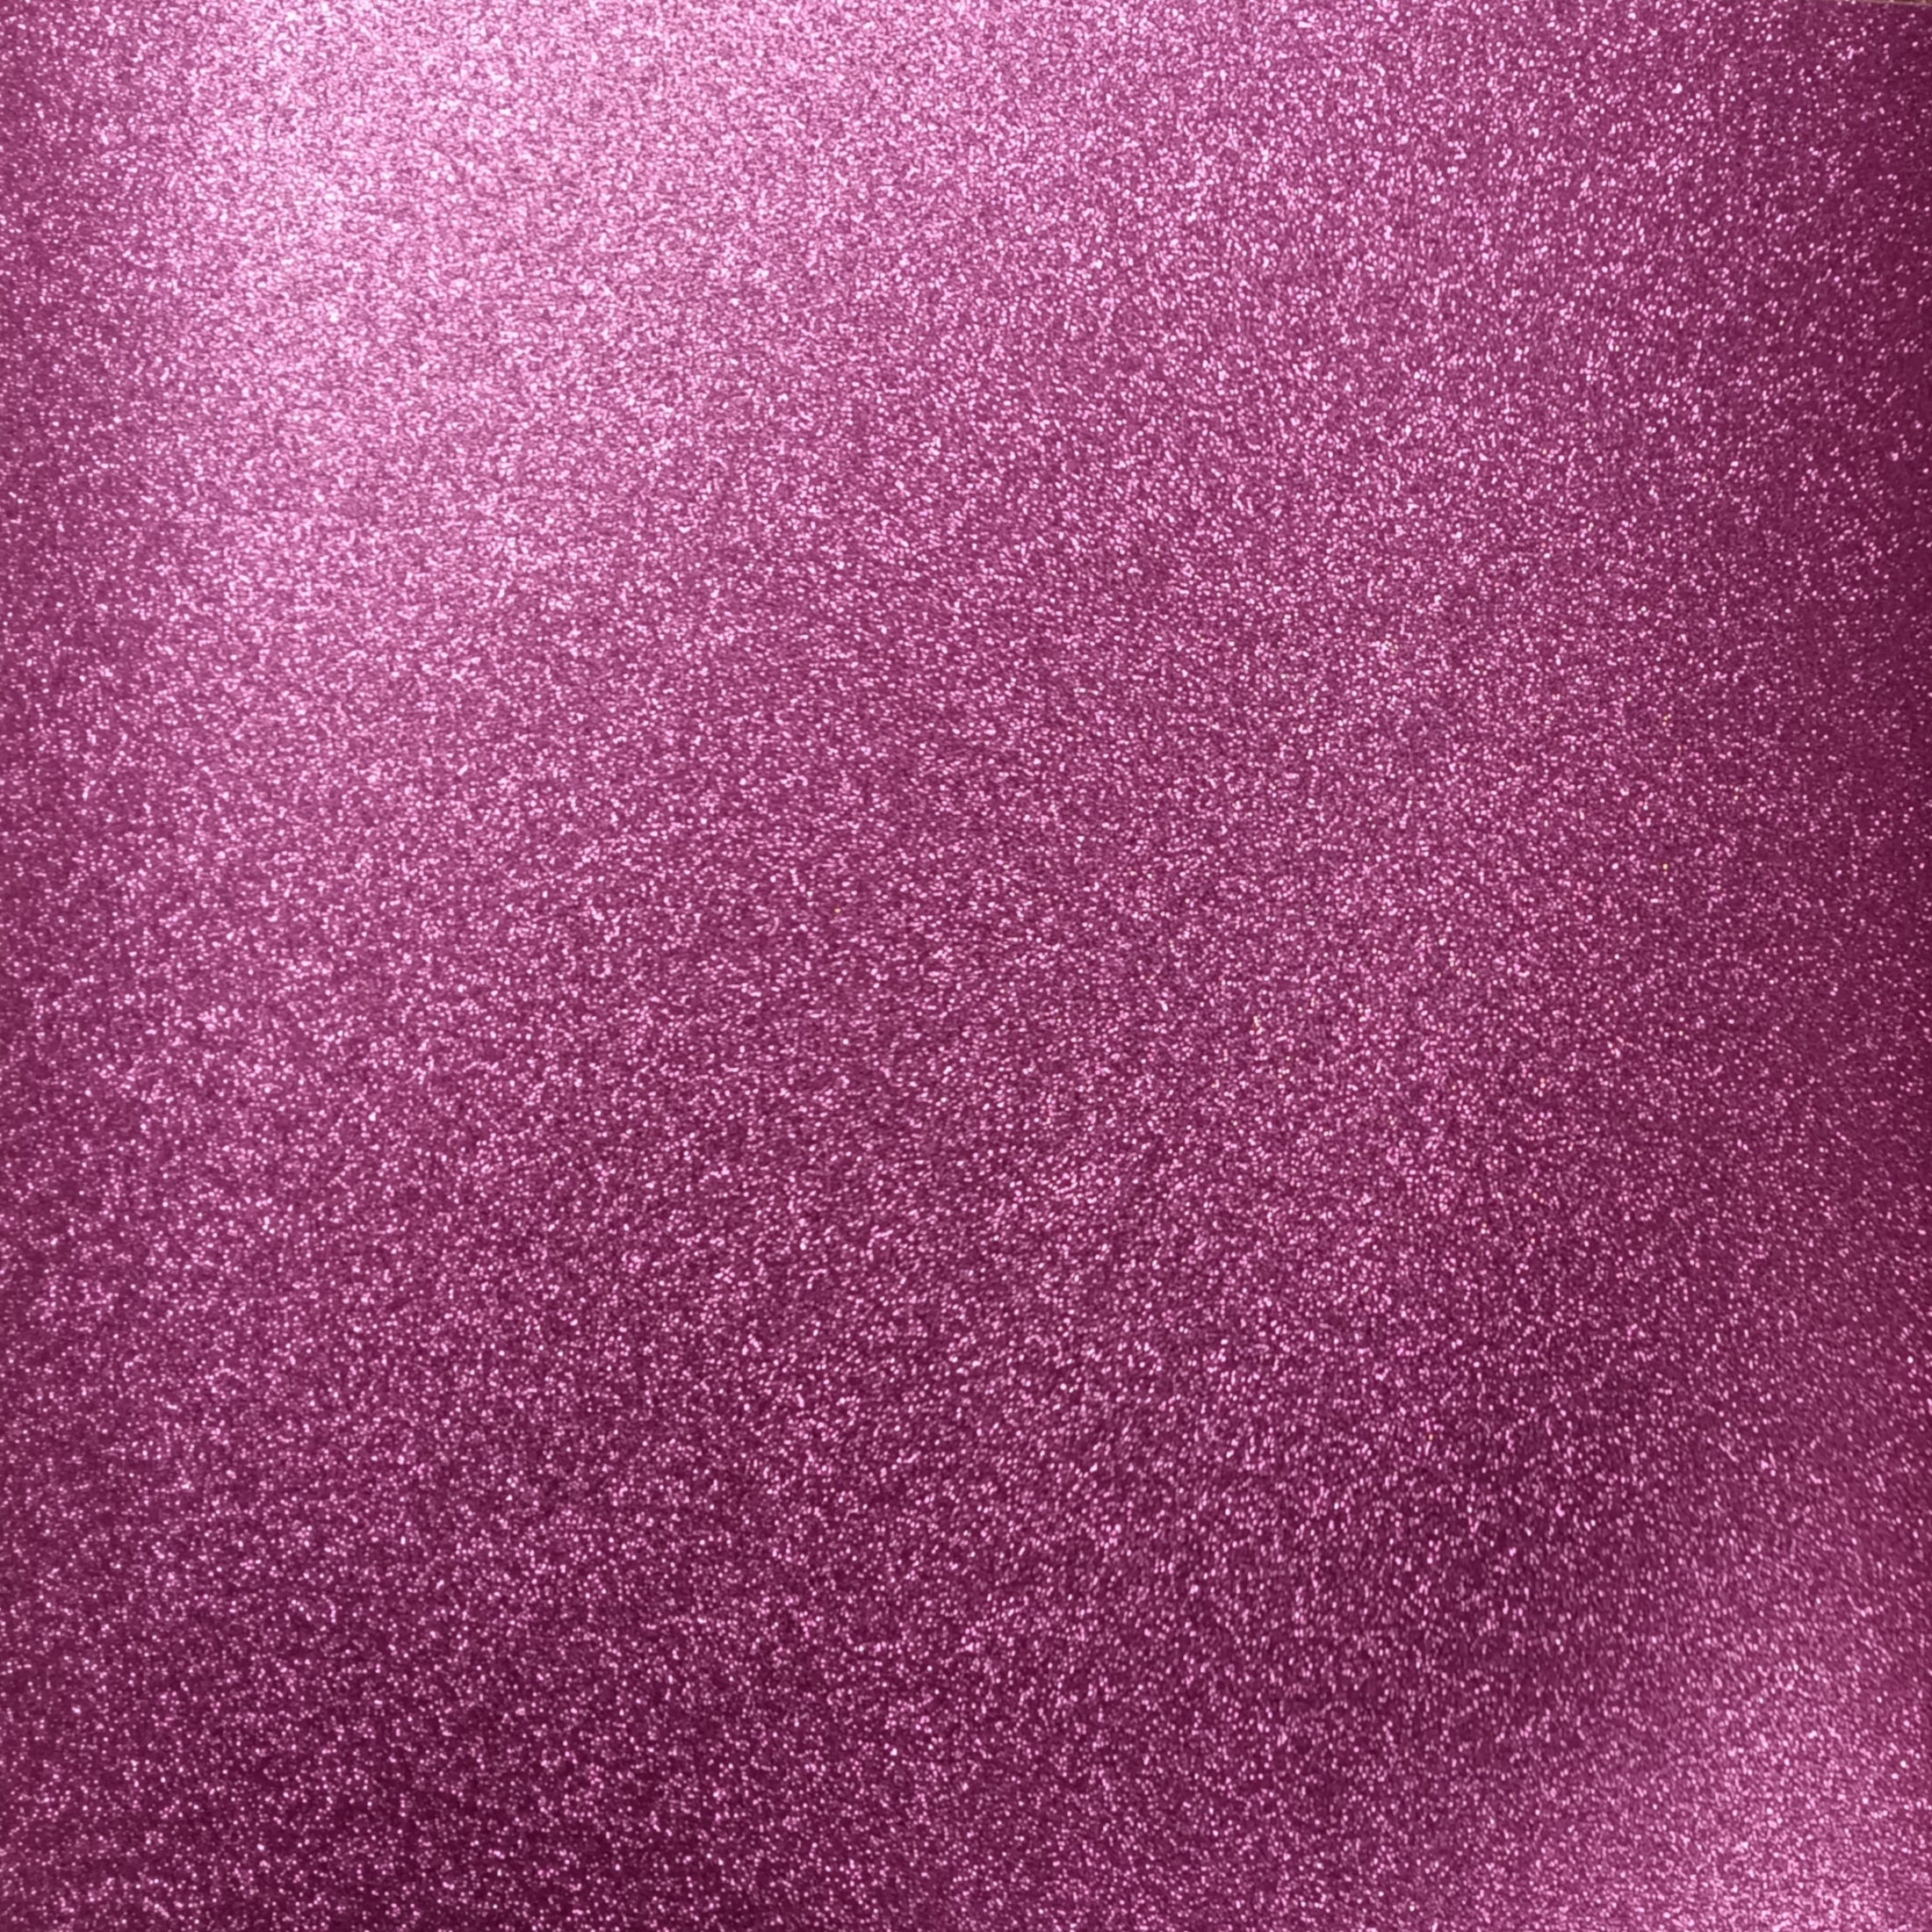 Purple Paper - 25 x 38 in 91 lb Text Vellum